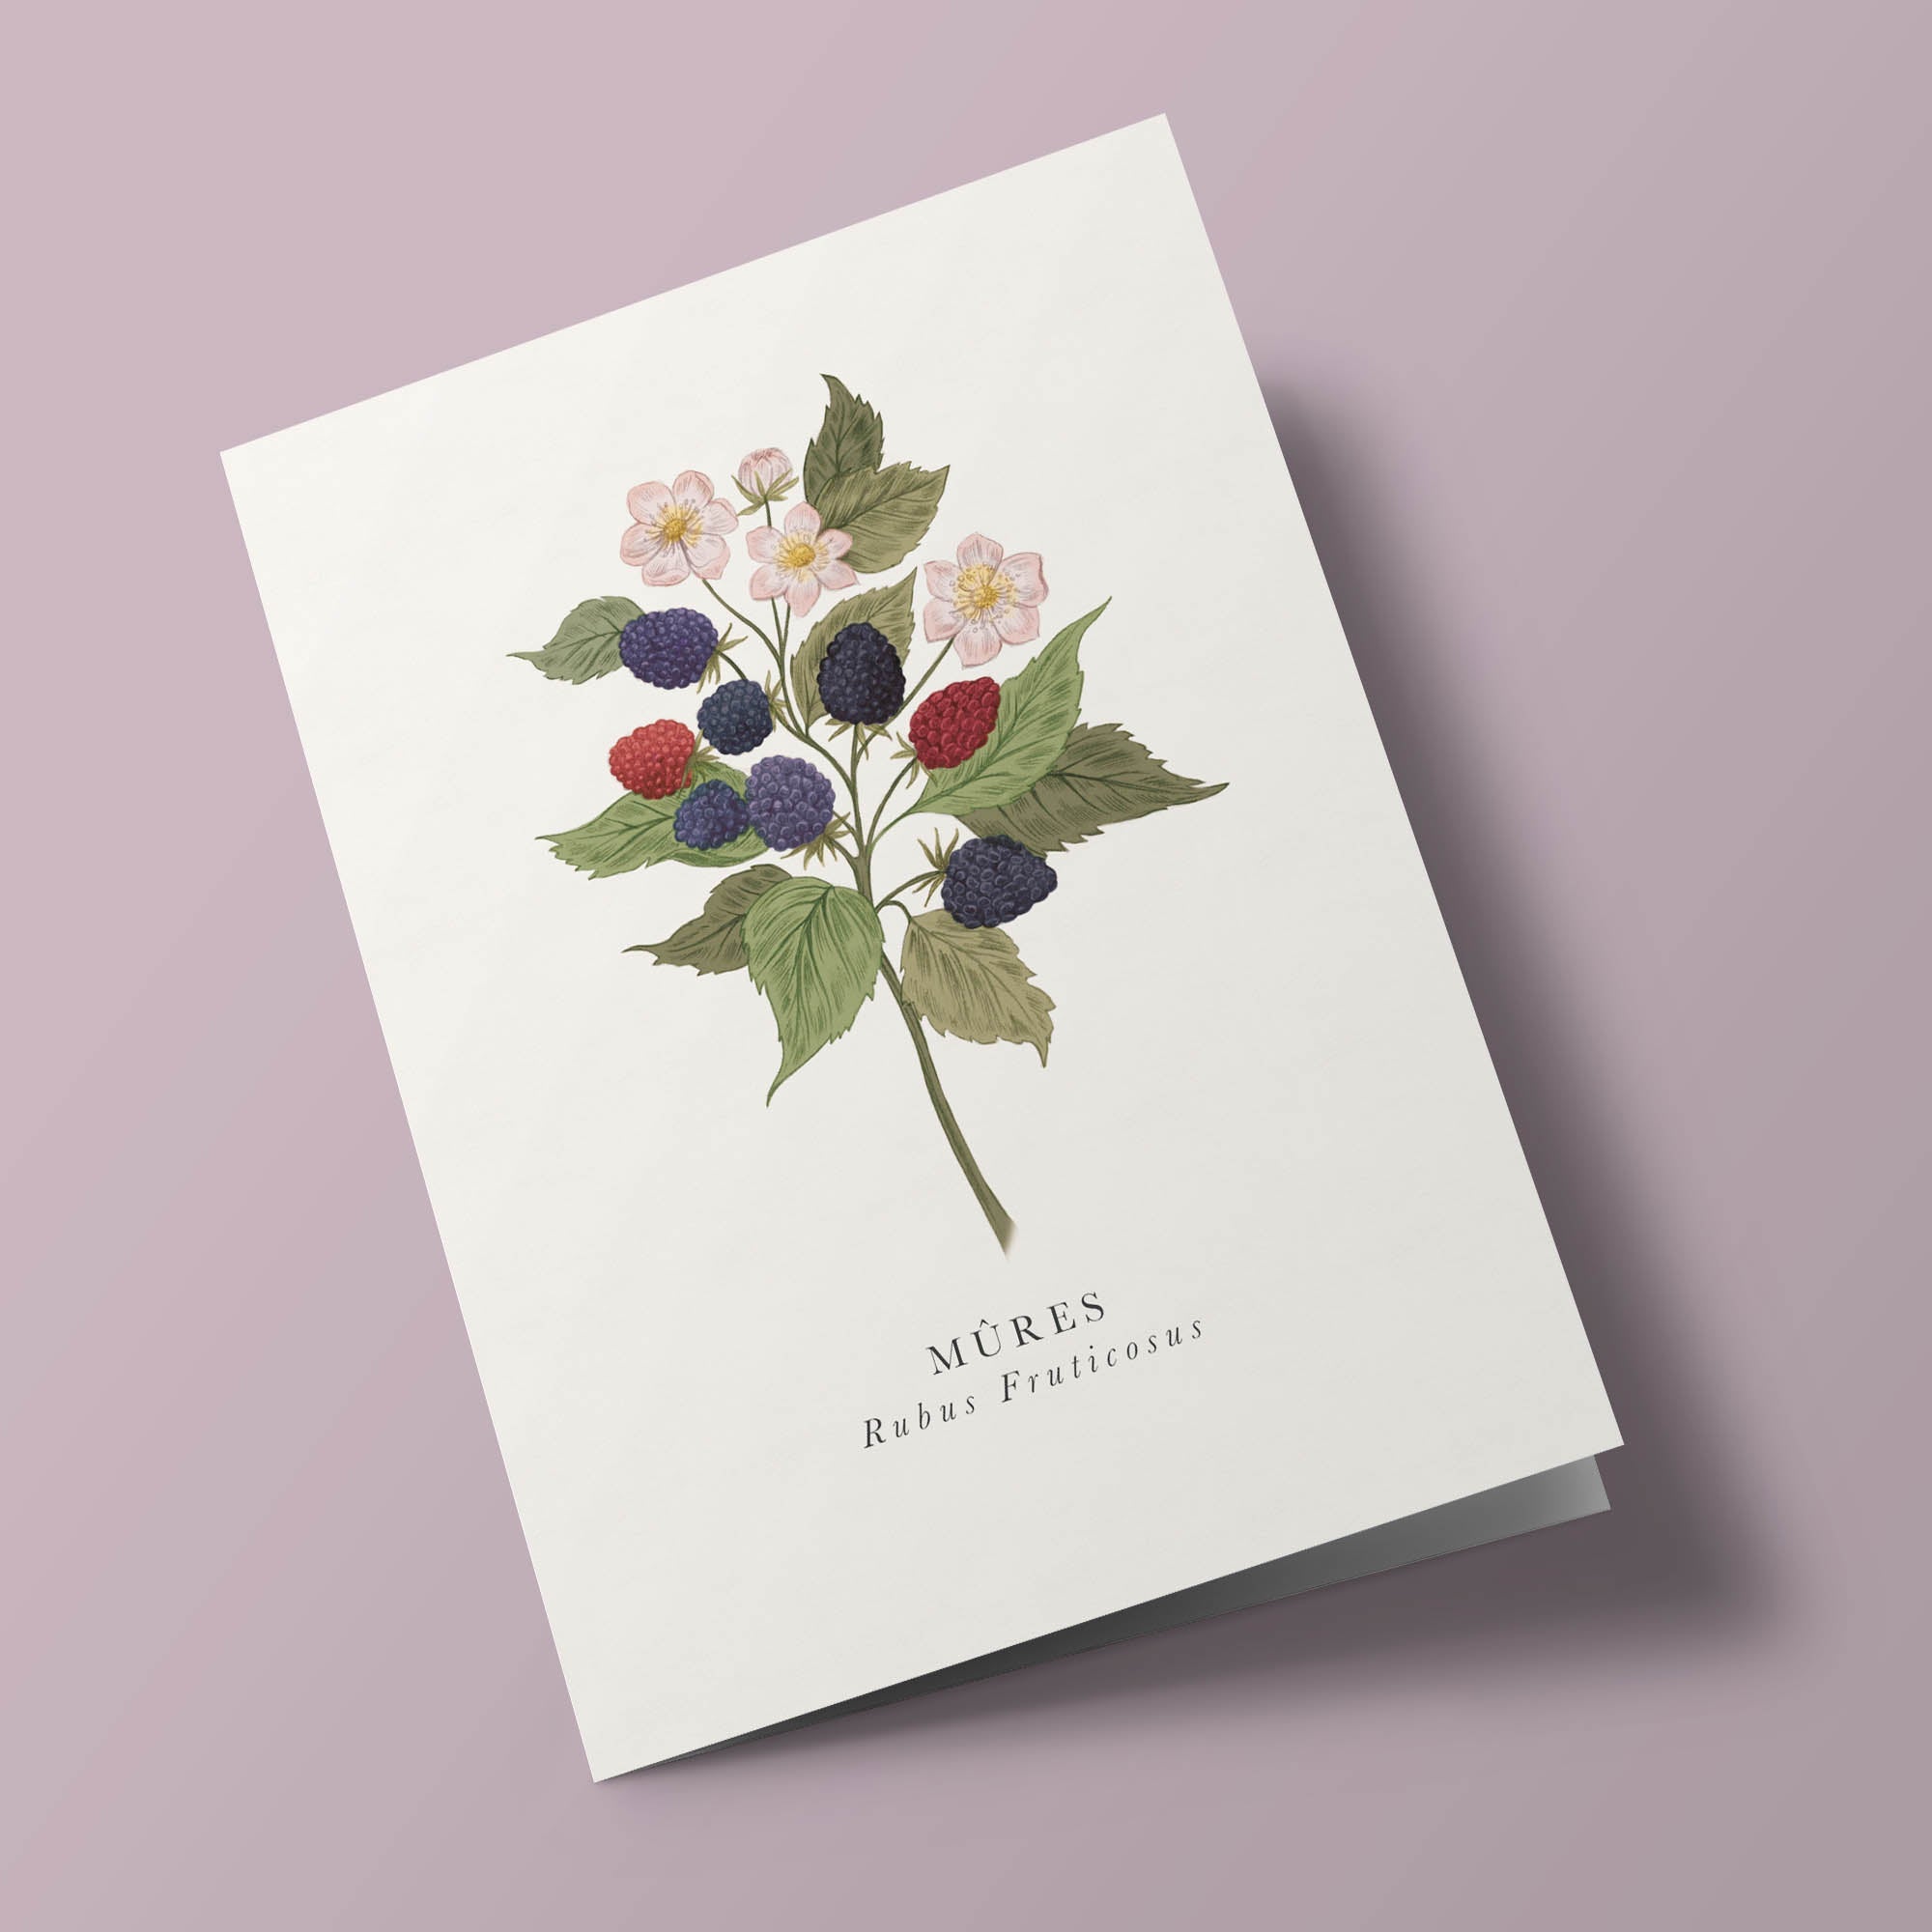 Book and botanics - Mûres